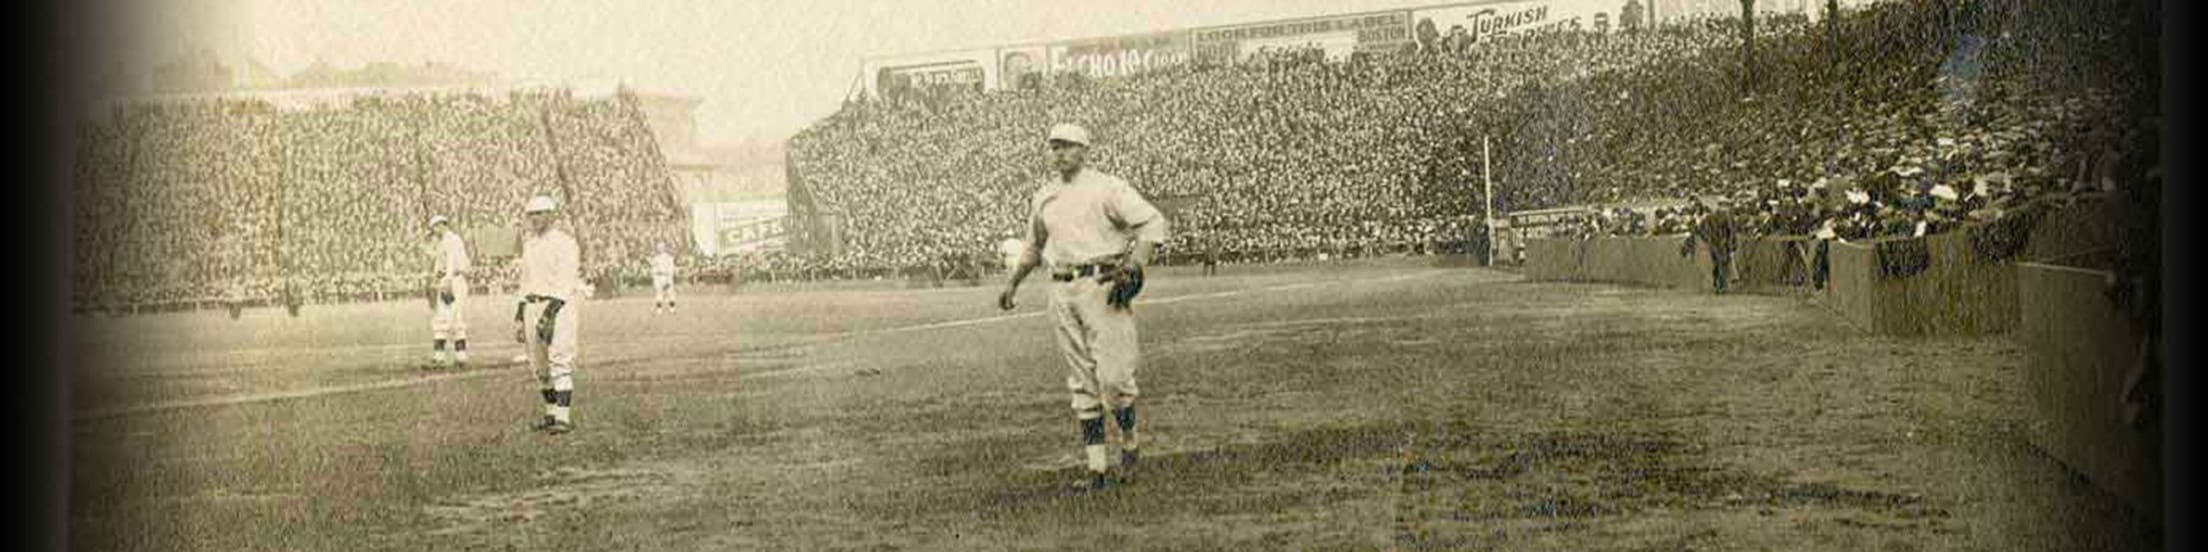 Sox Century: Oct. 13, 1917 - South Side Sox